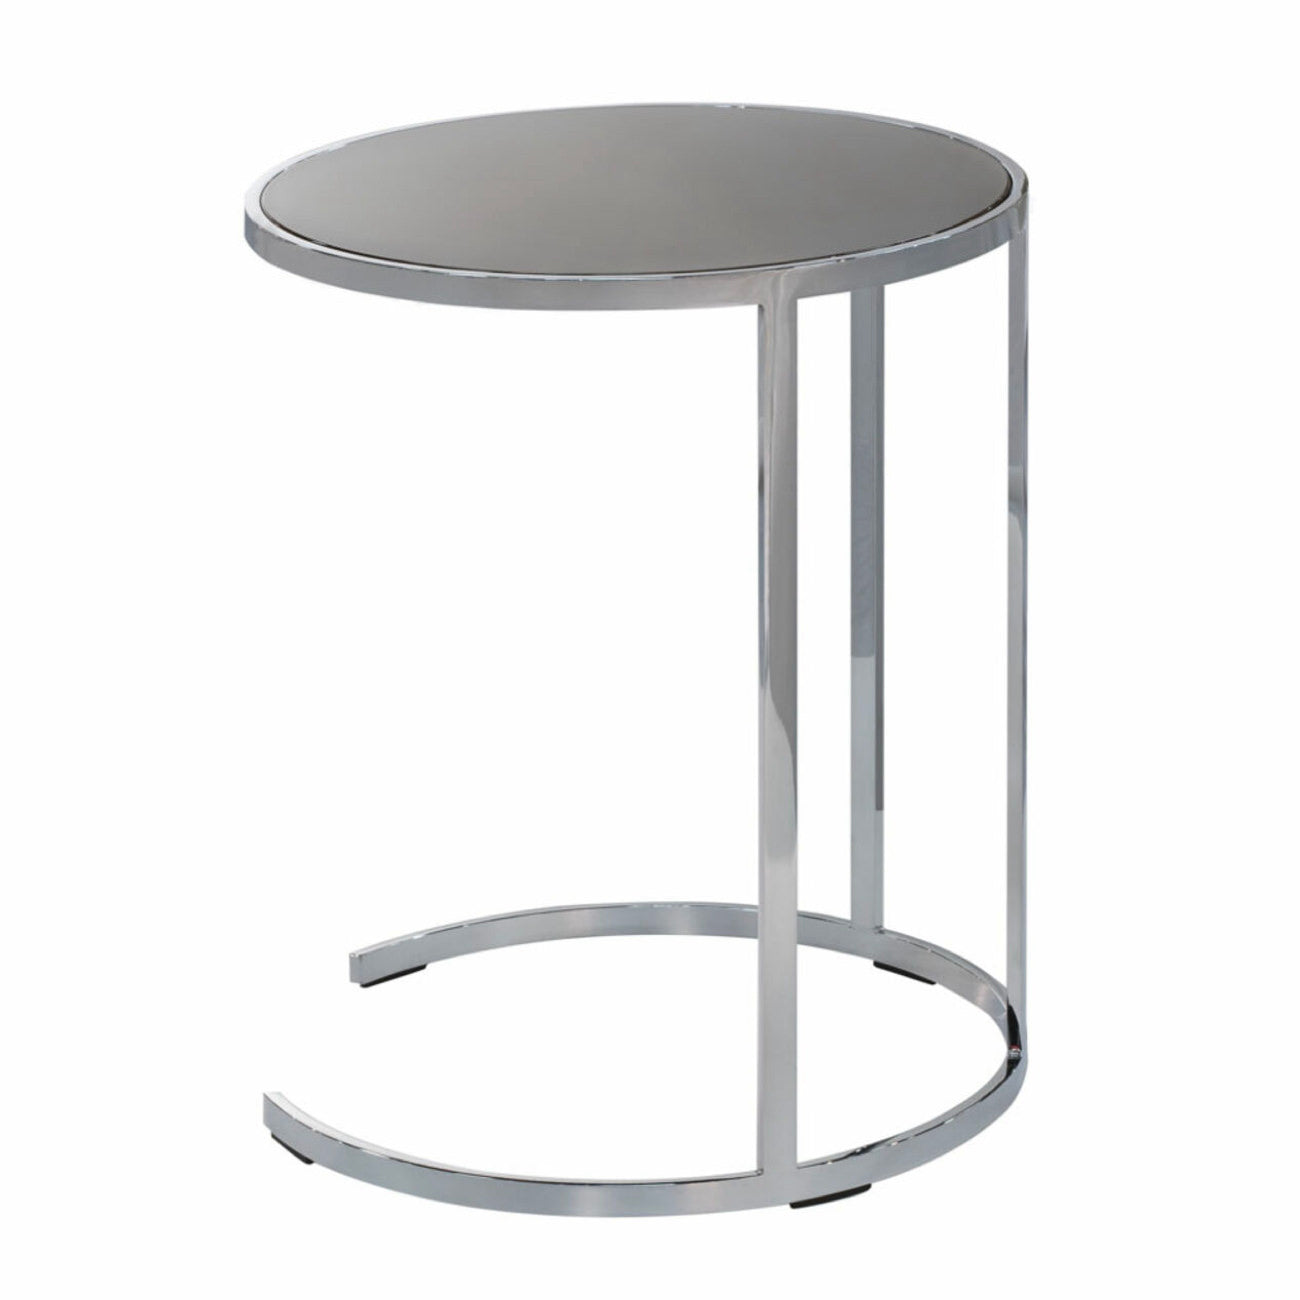 CAMEO 45-1 table - Christine Kröncke Interior Design